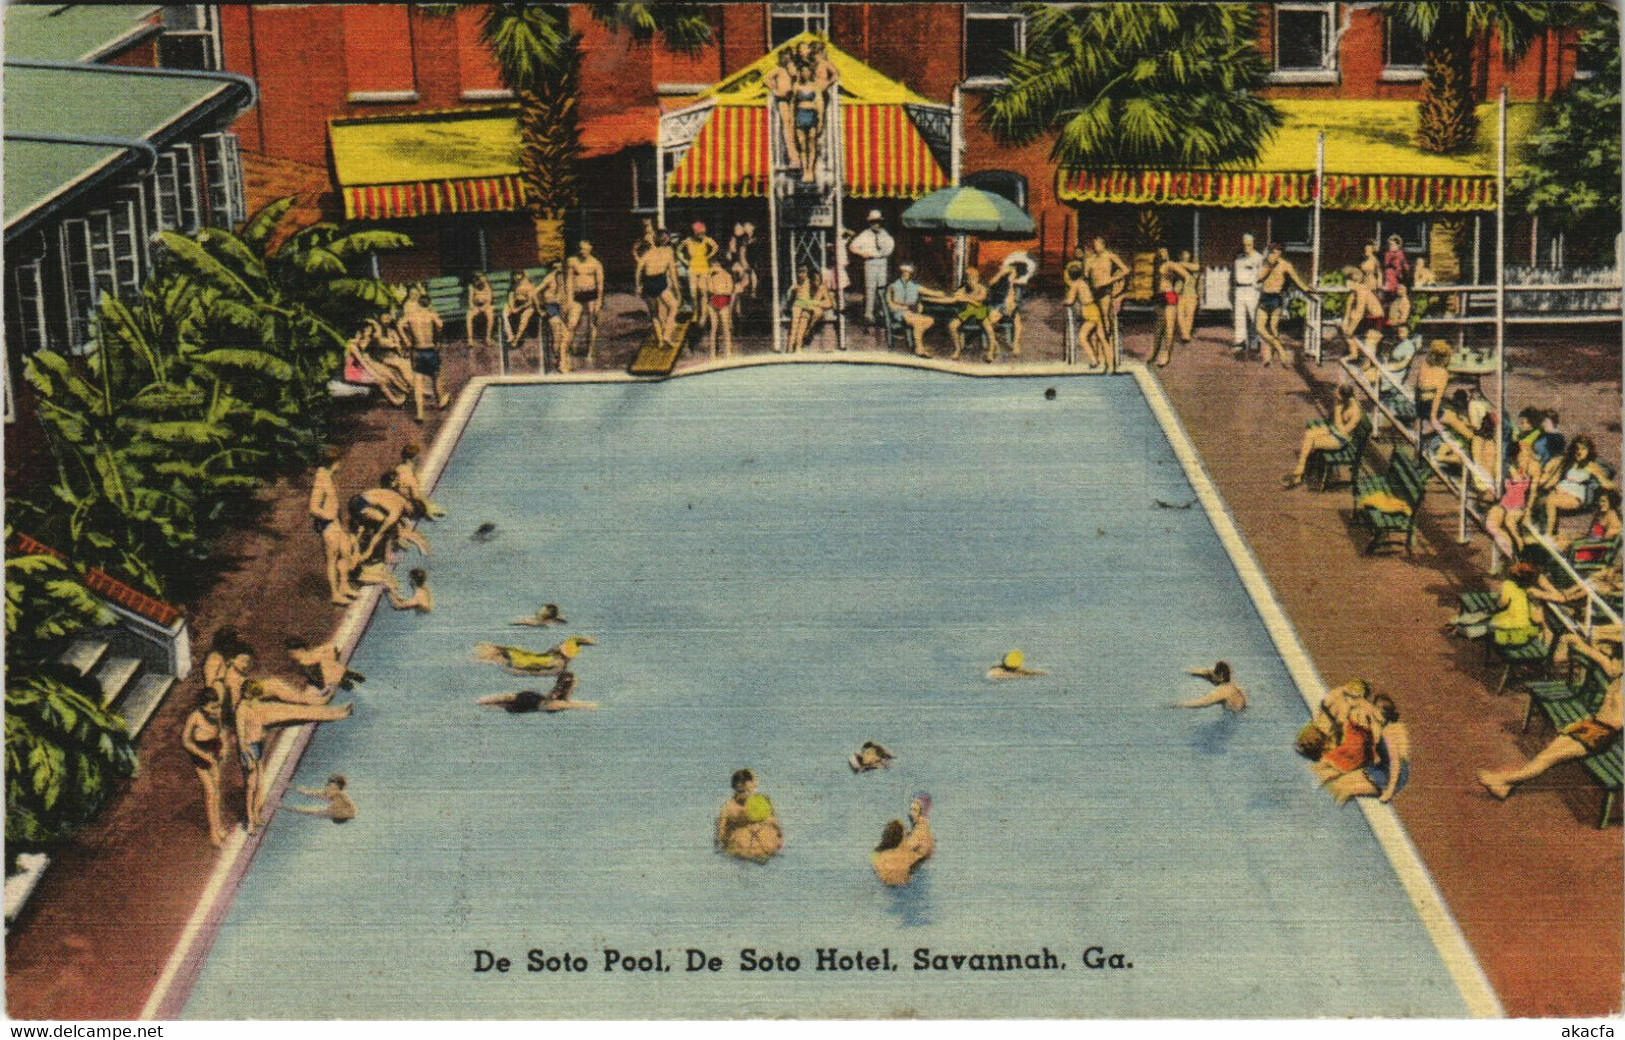 PC US, GA, SAVANNAH, DE SOTO POOL, DE SOTO HOTEL, Vintage Postcard (b32178) - Savannah